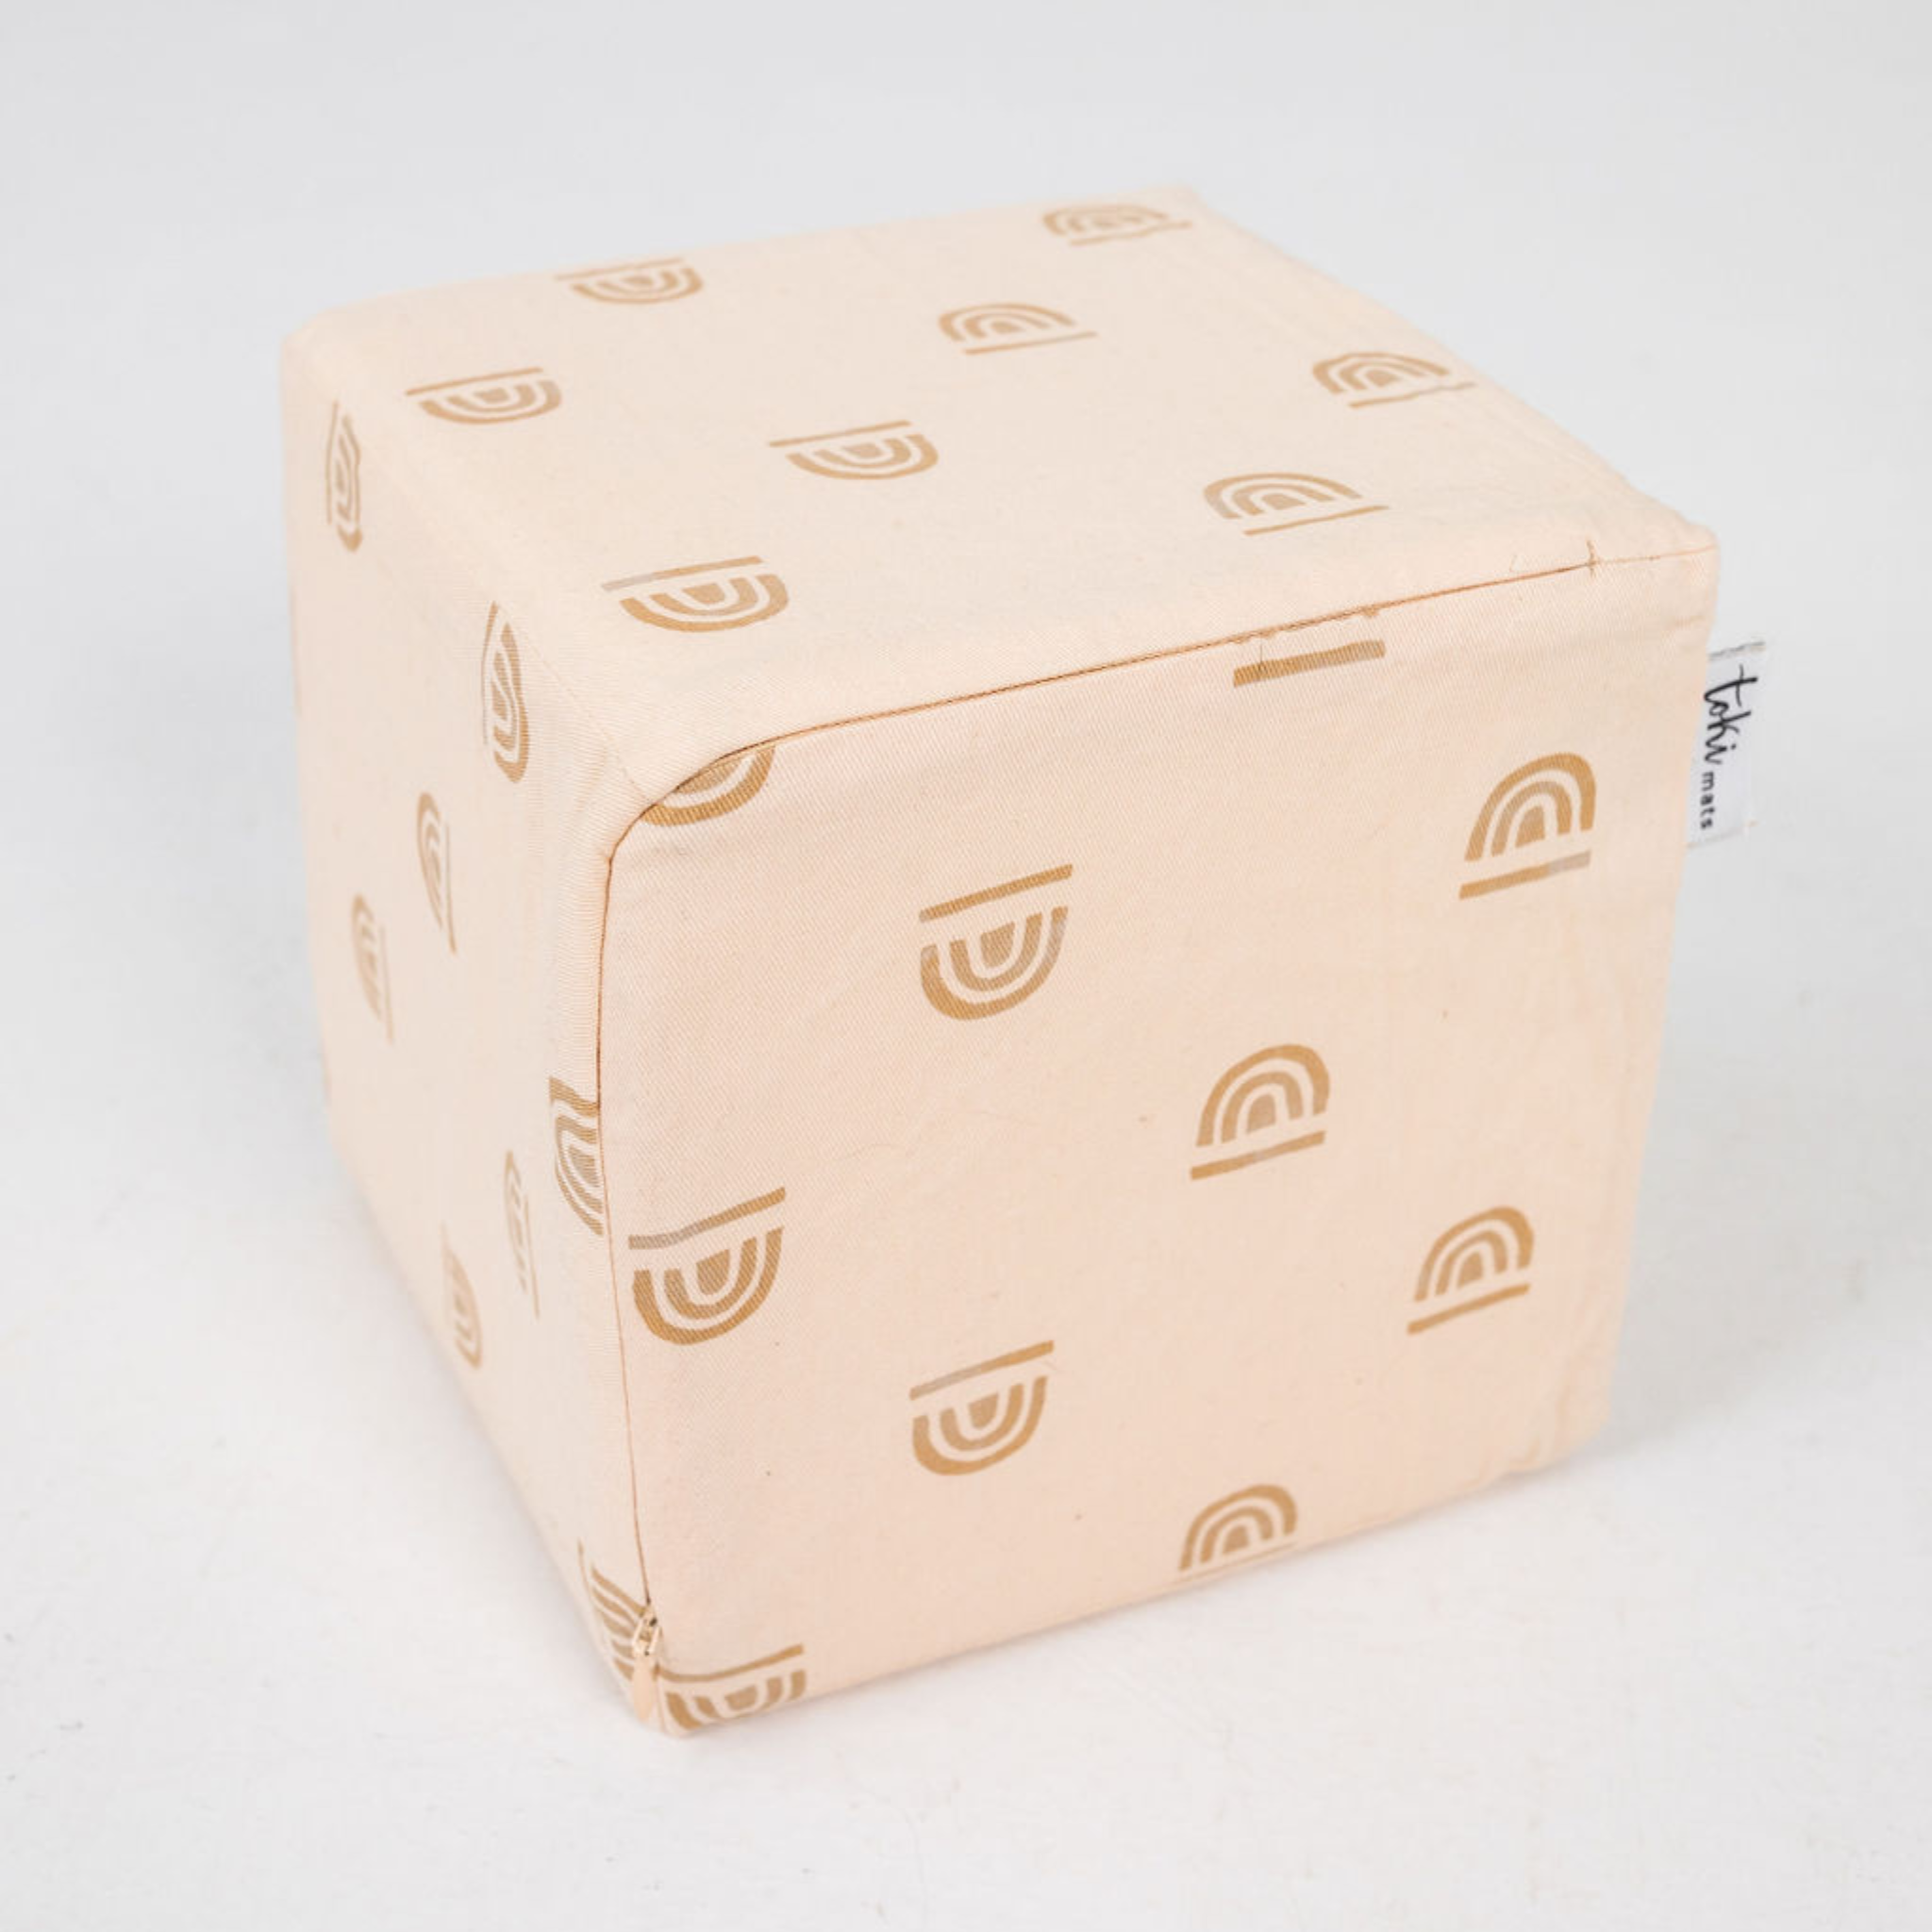 Toki Mats Rainbow Stamp in Cream Play Cube